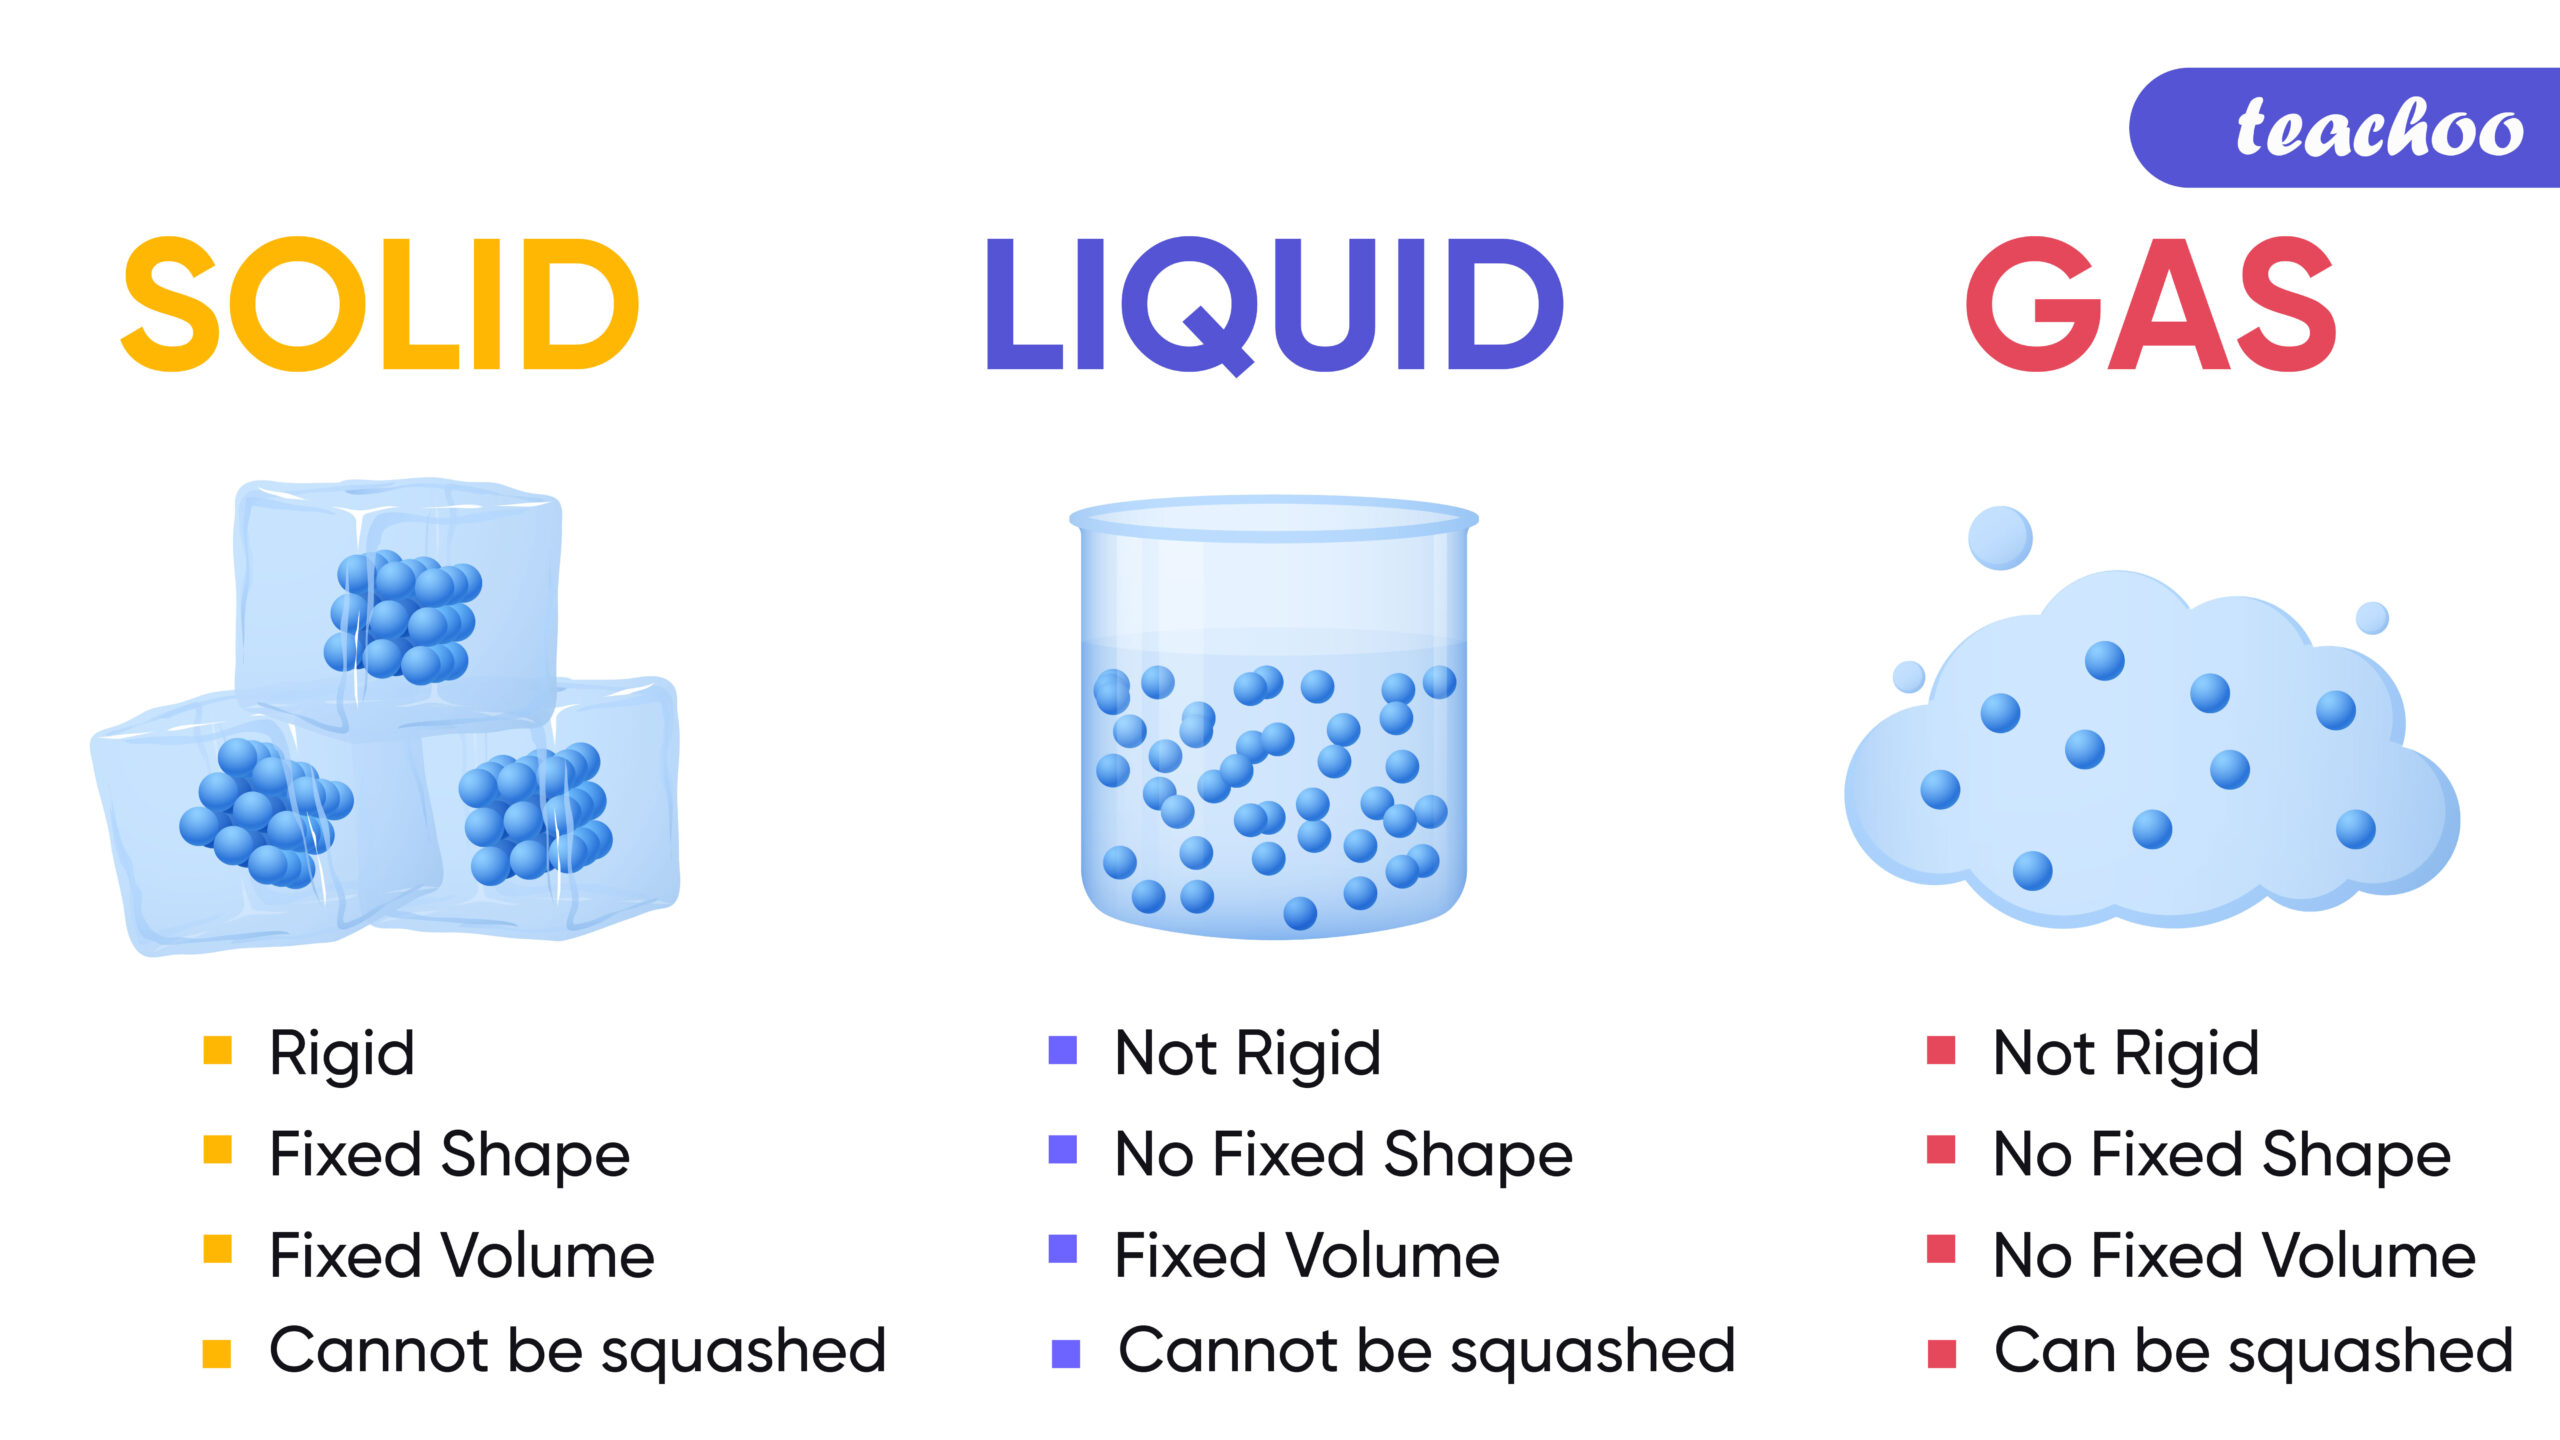 properties-of-solids-liquids-gases-compared-teachoo-science-gasrebate